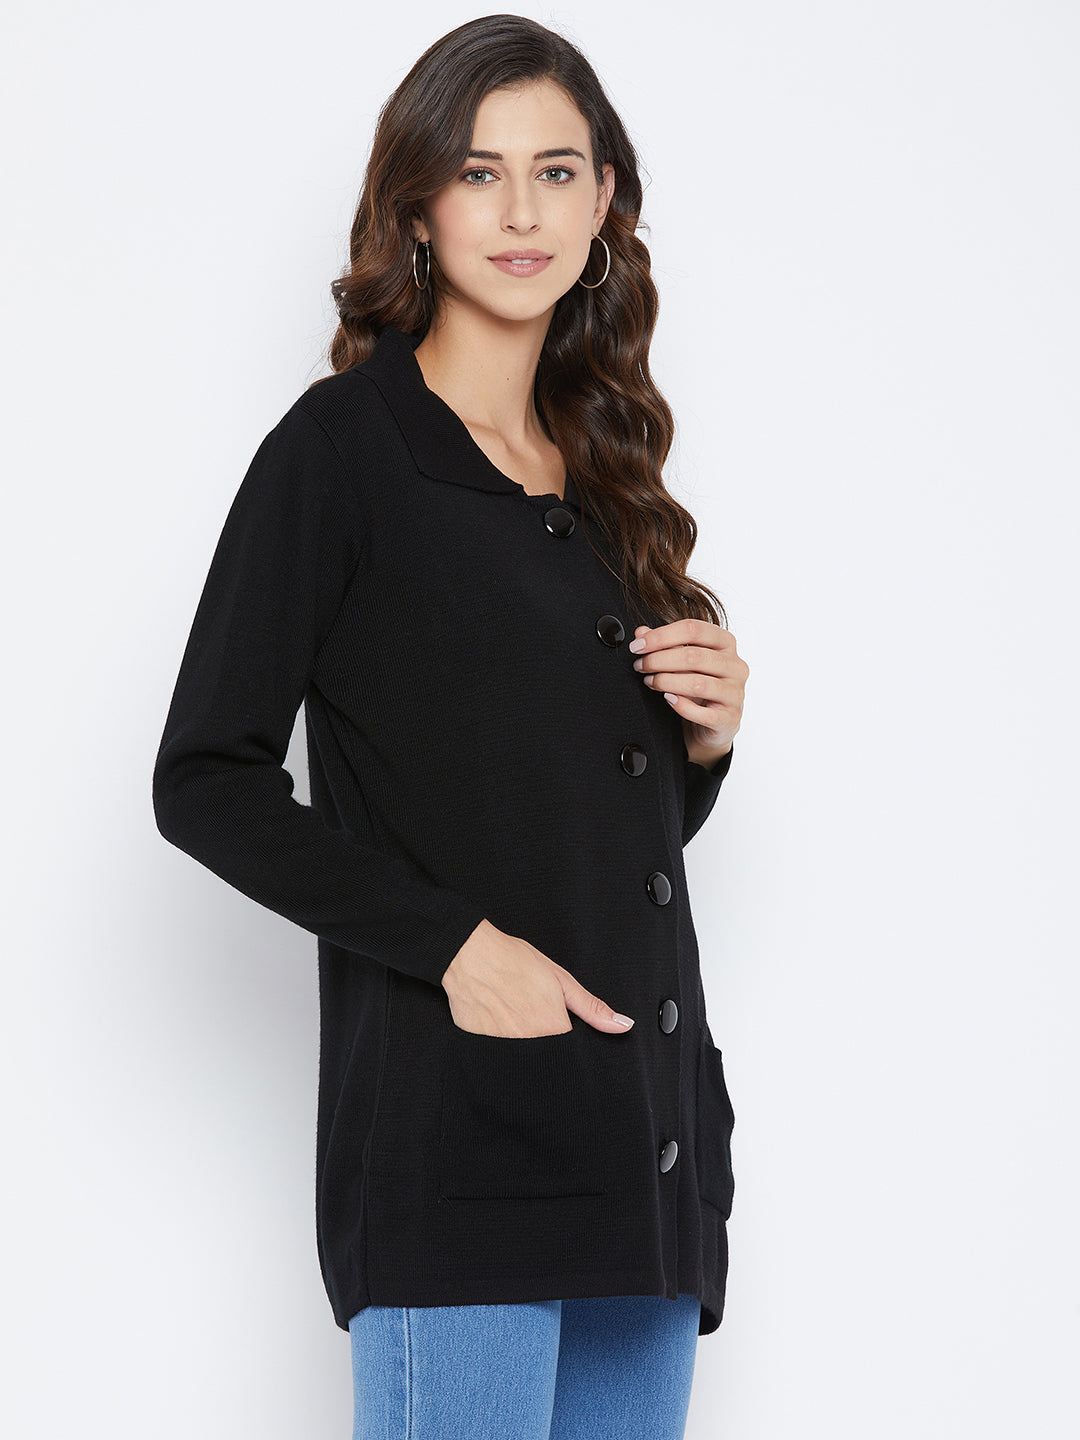 Livfree Women's Collar neck Full-Sleeves Solid Cardigans - Black